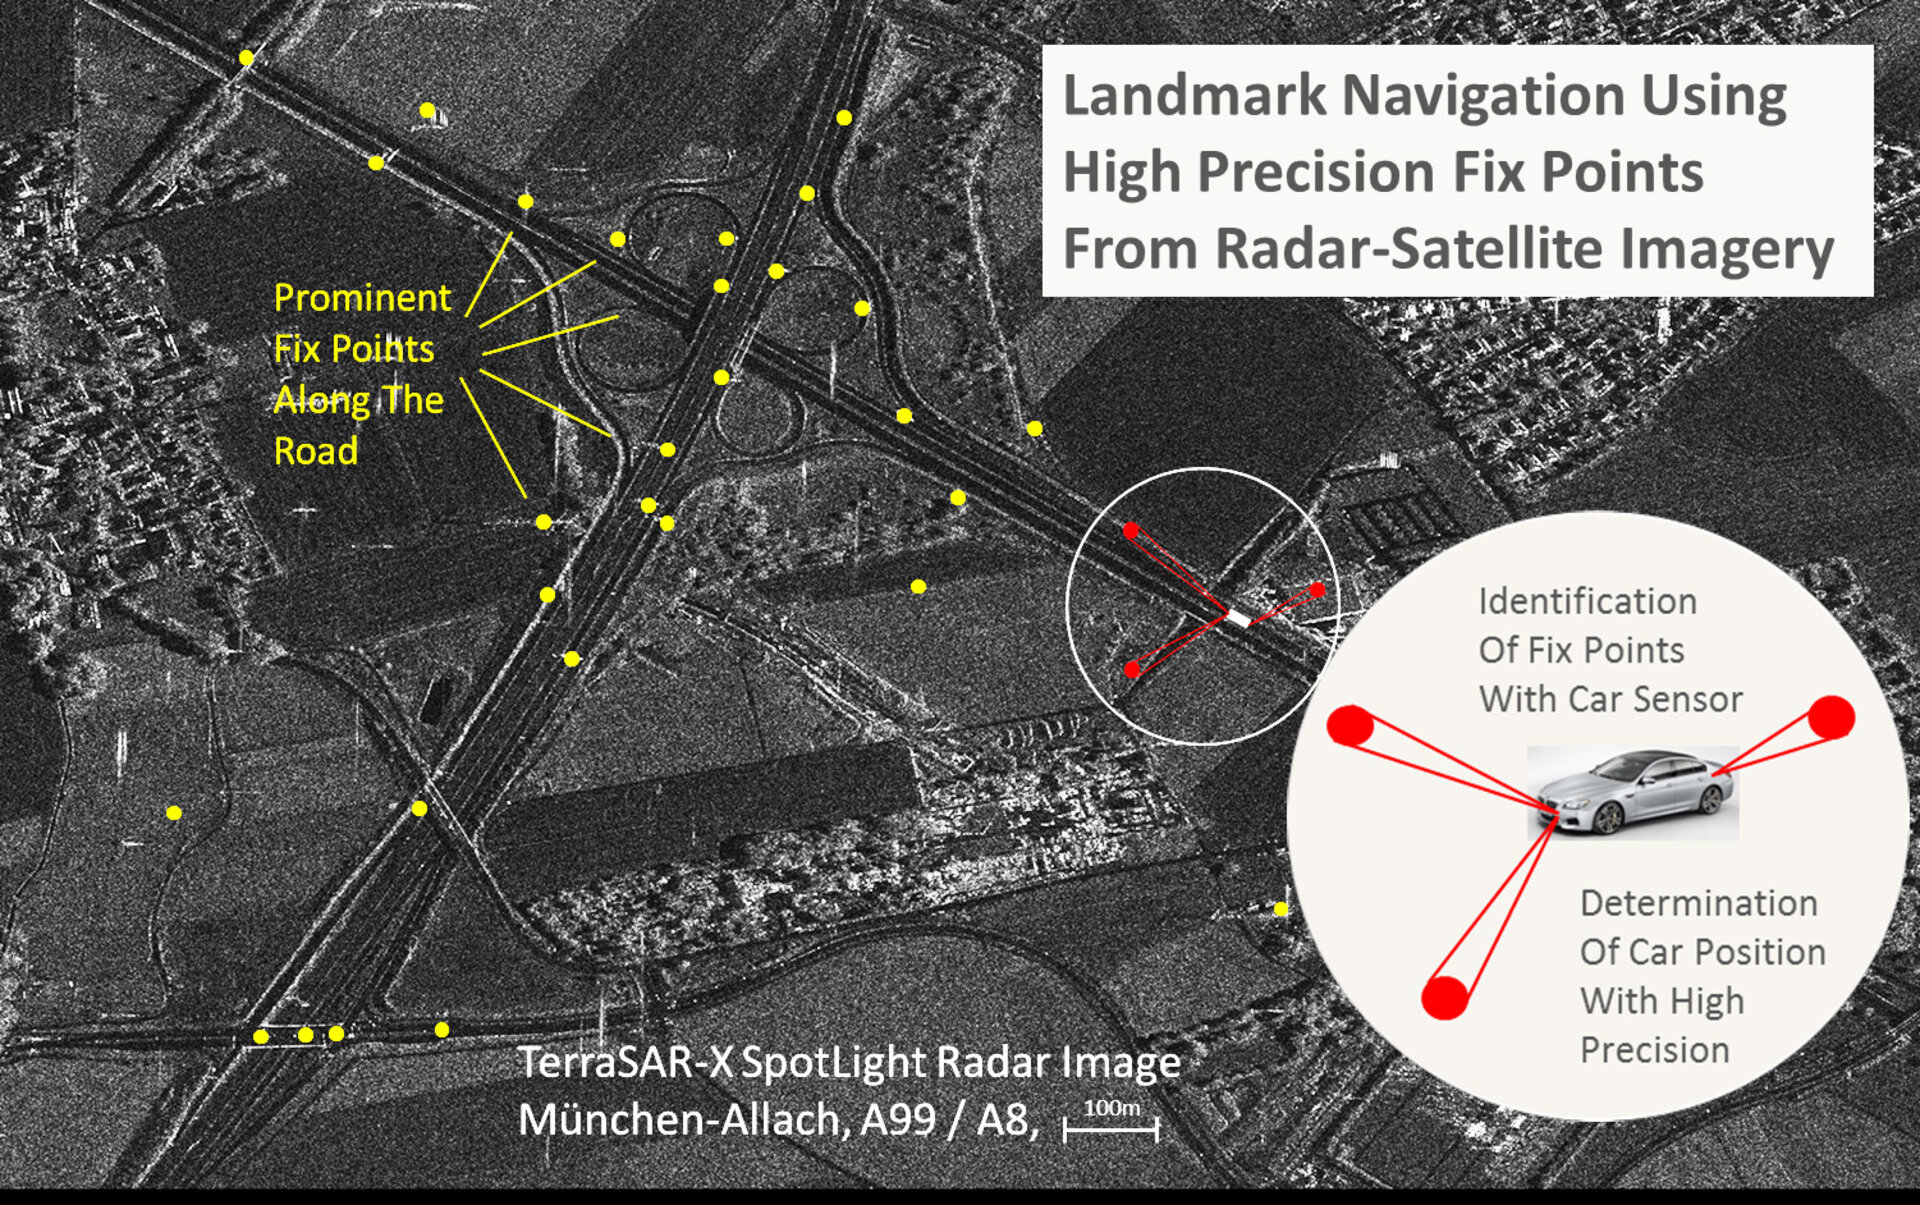 Landmark-based navigation system wins Copernicus Masters award